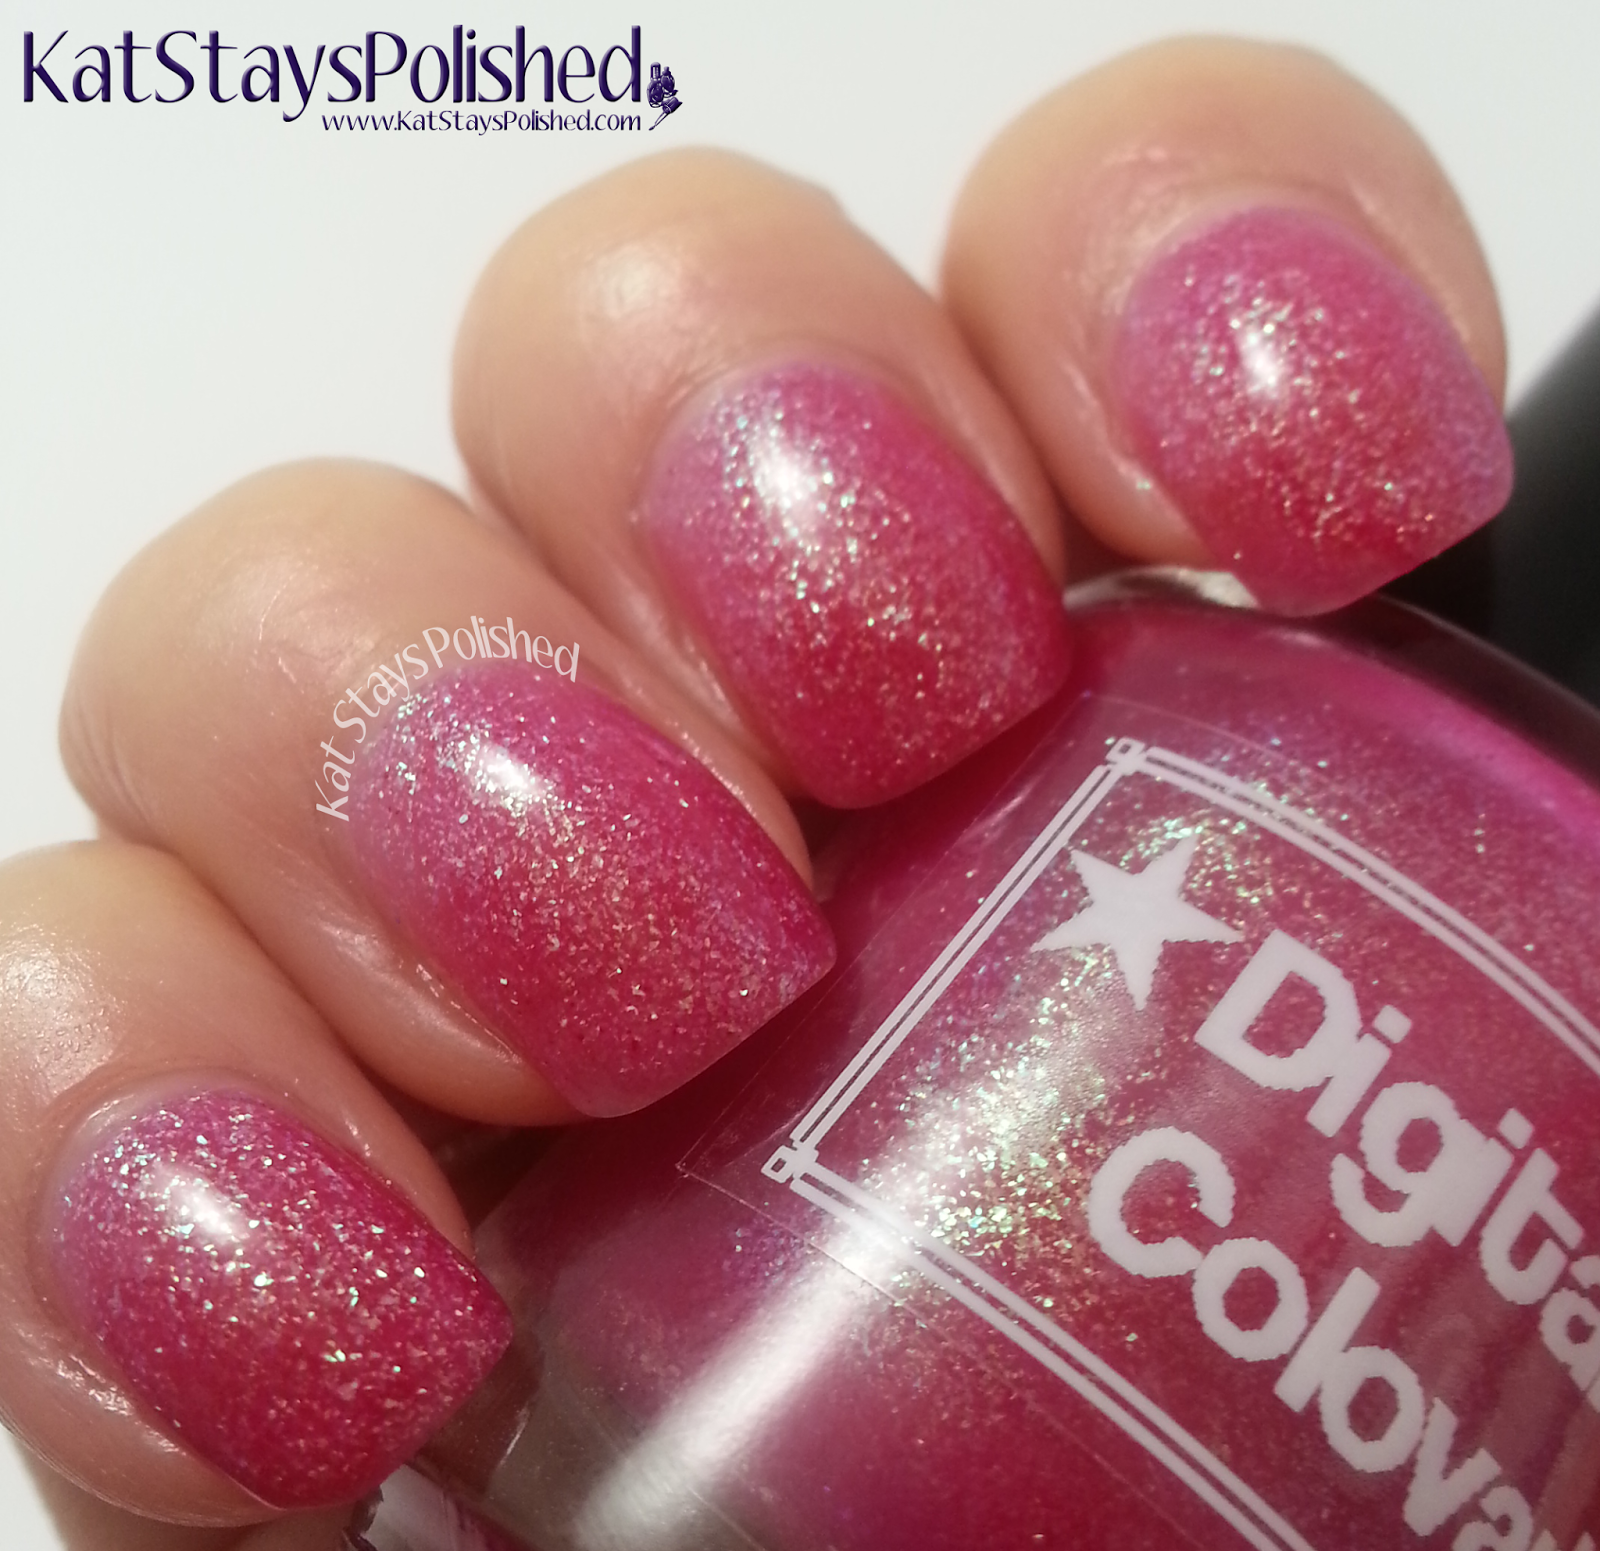 Digital Nails: Colovaria | Kat Stays Polished